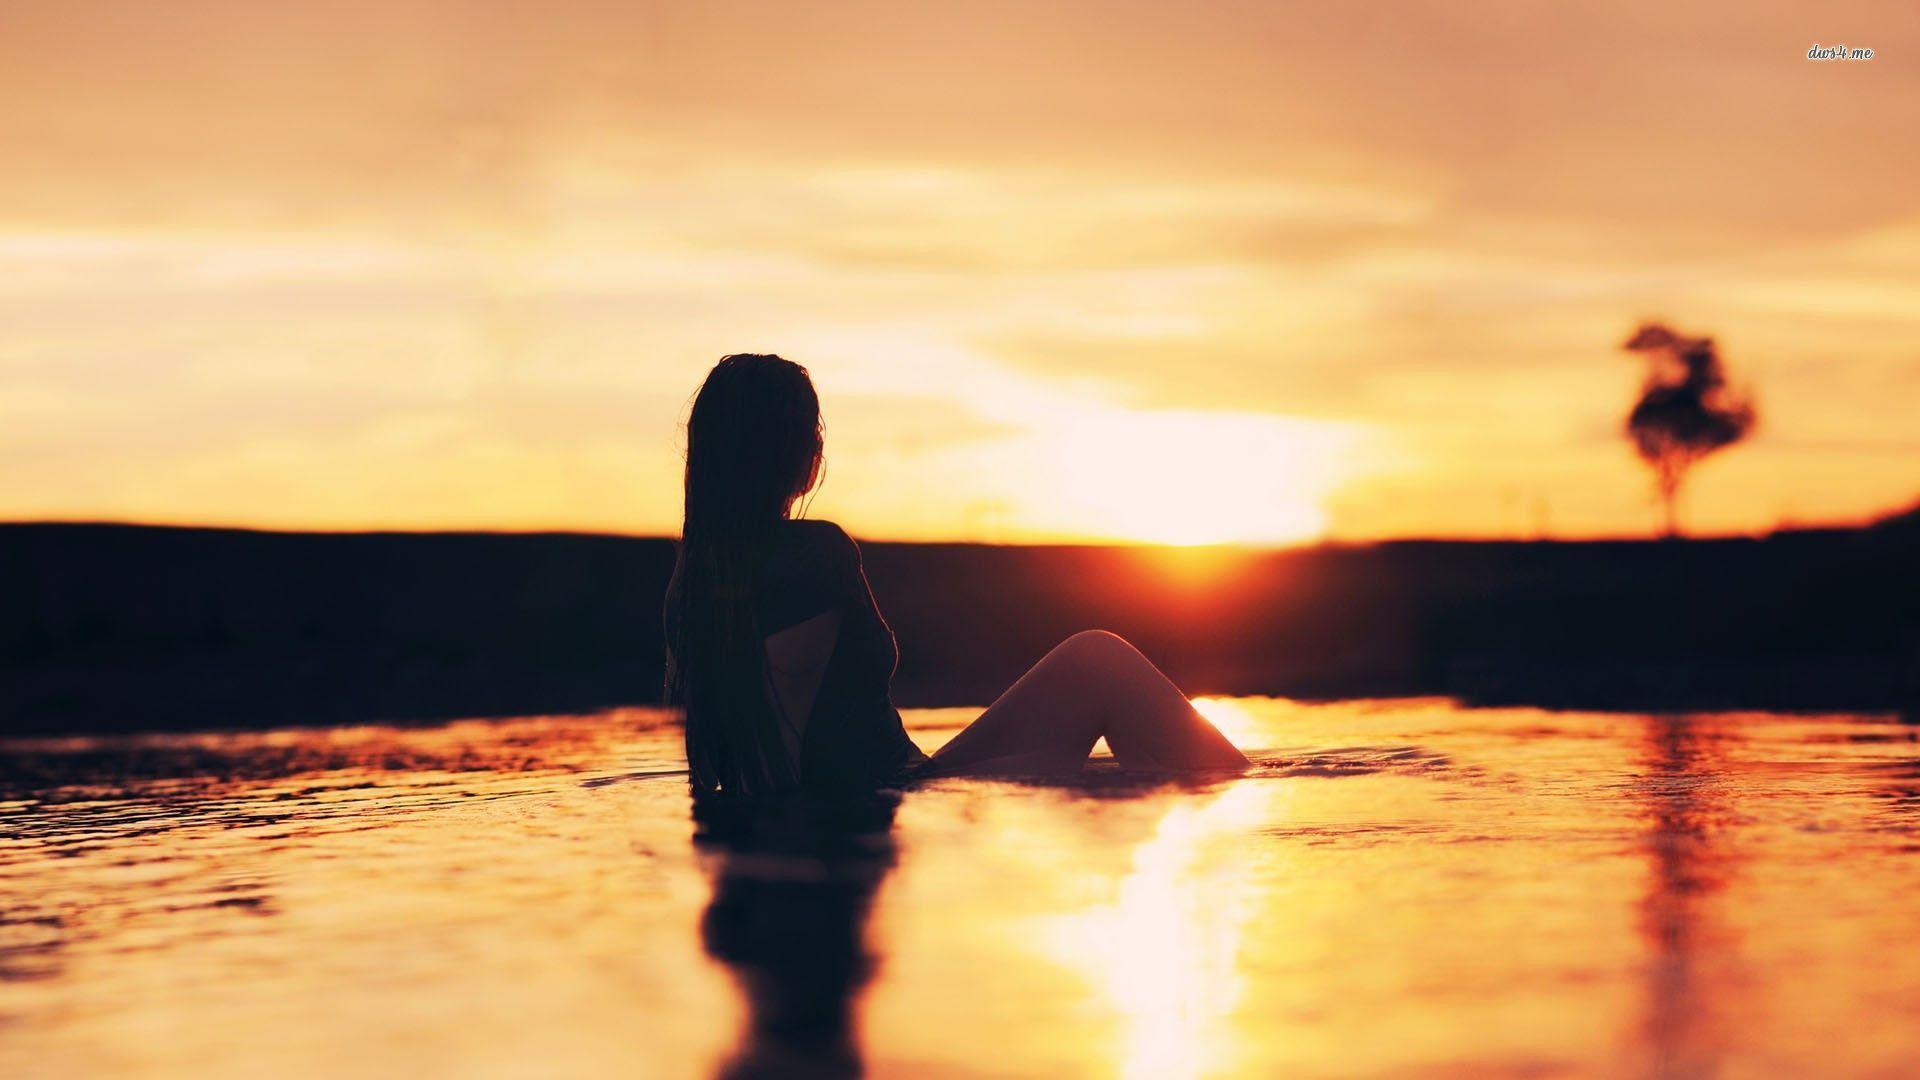 Girl in the lake at sunset wallpaper wallpaper